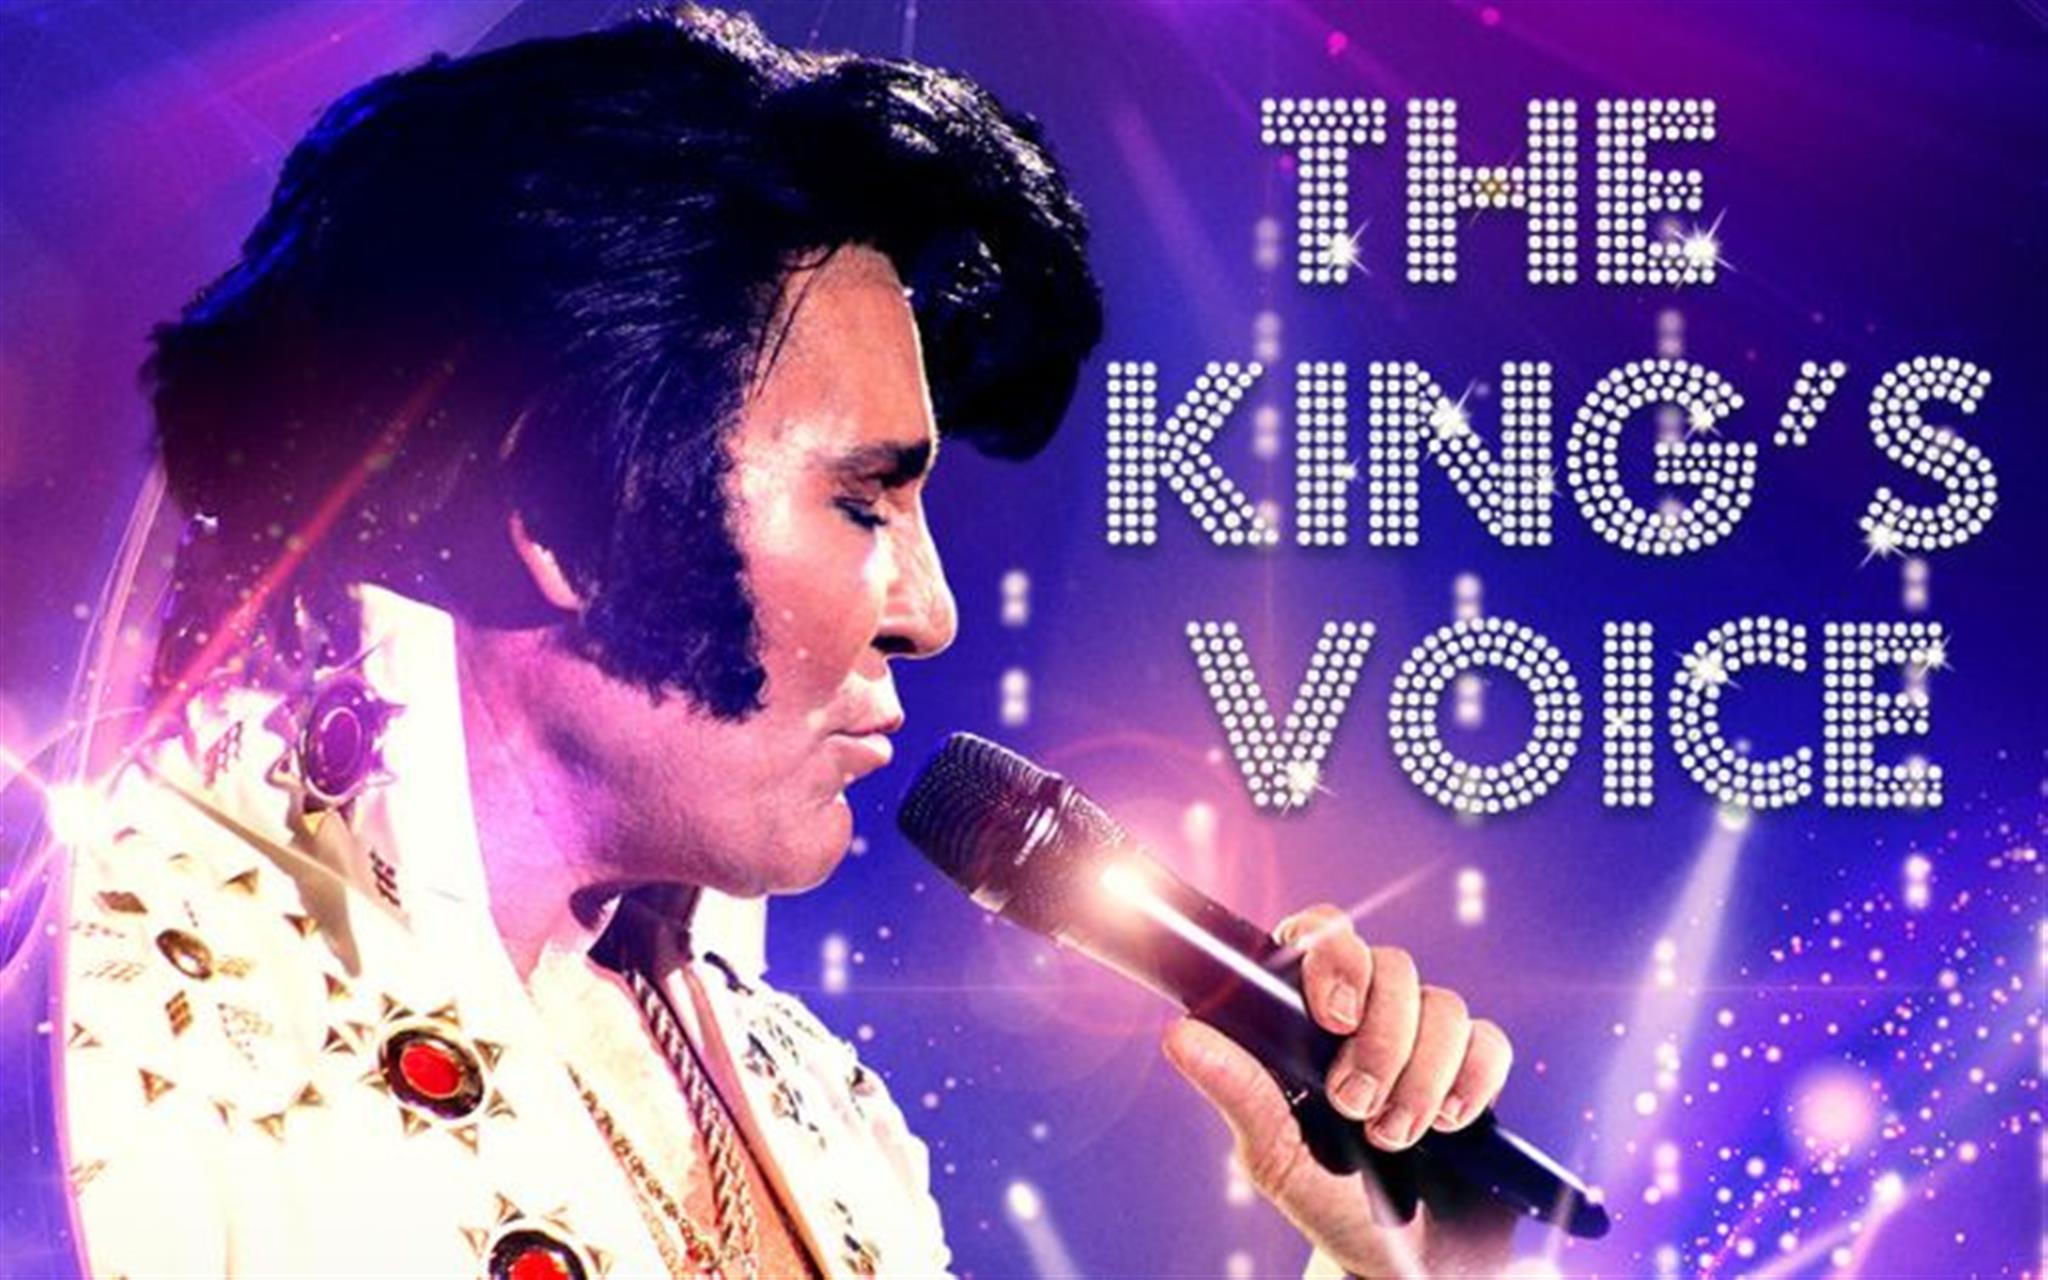 The King's Voice - Gordon Hendricks as Elvis